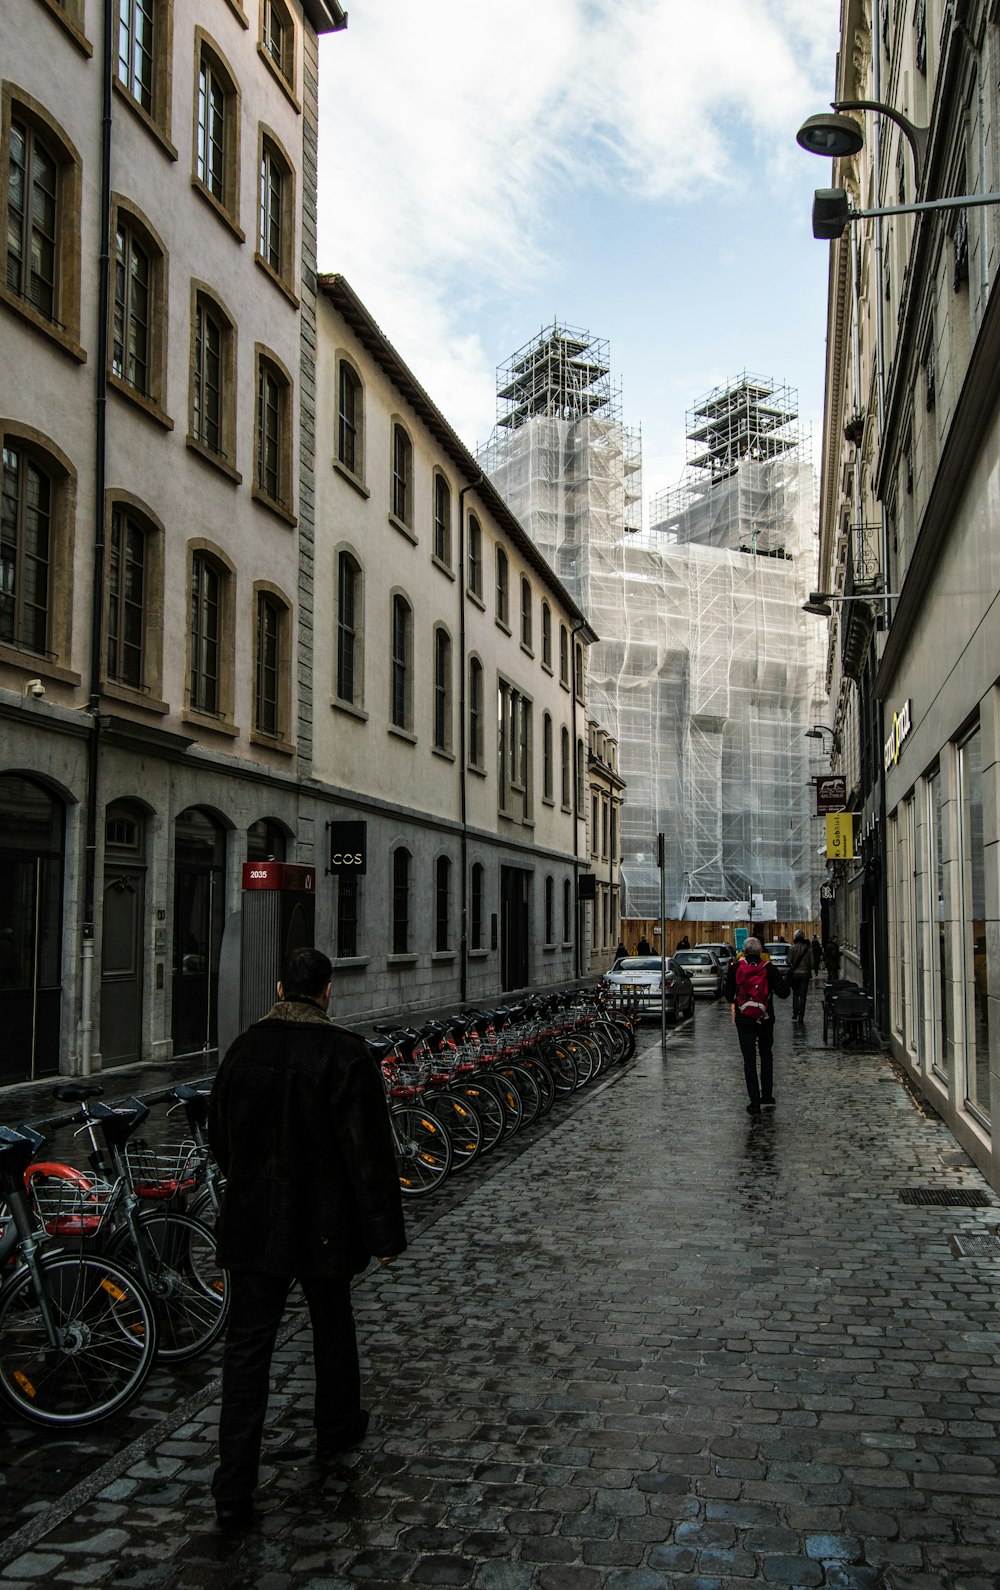 a man walking down a street next to tall buildings